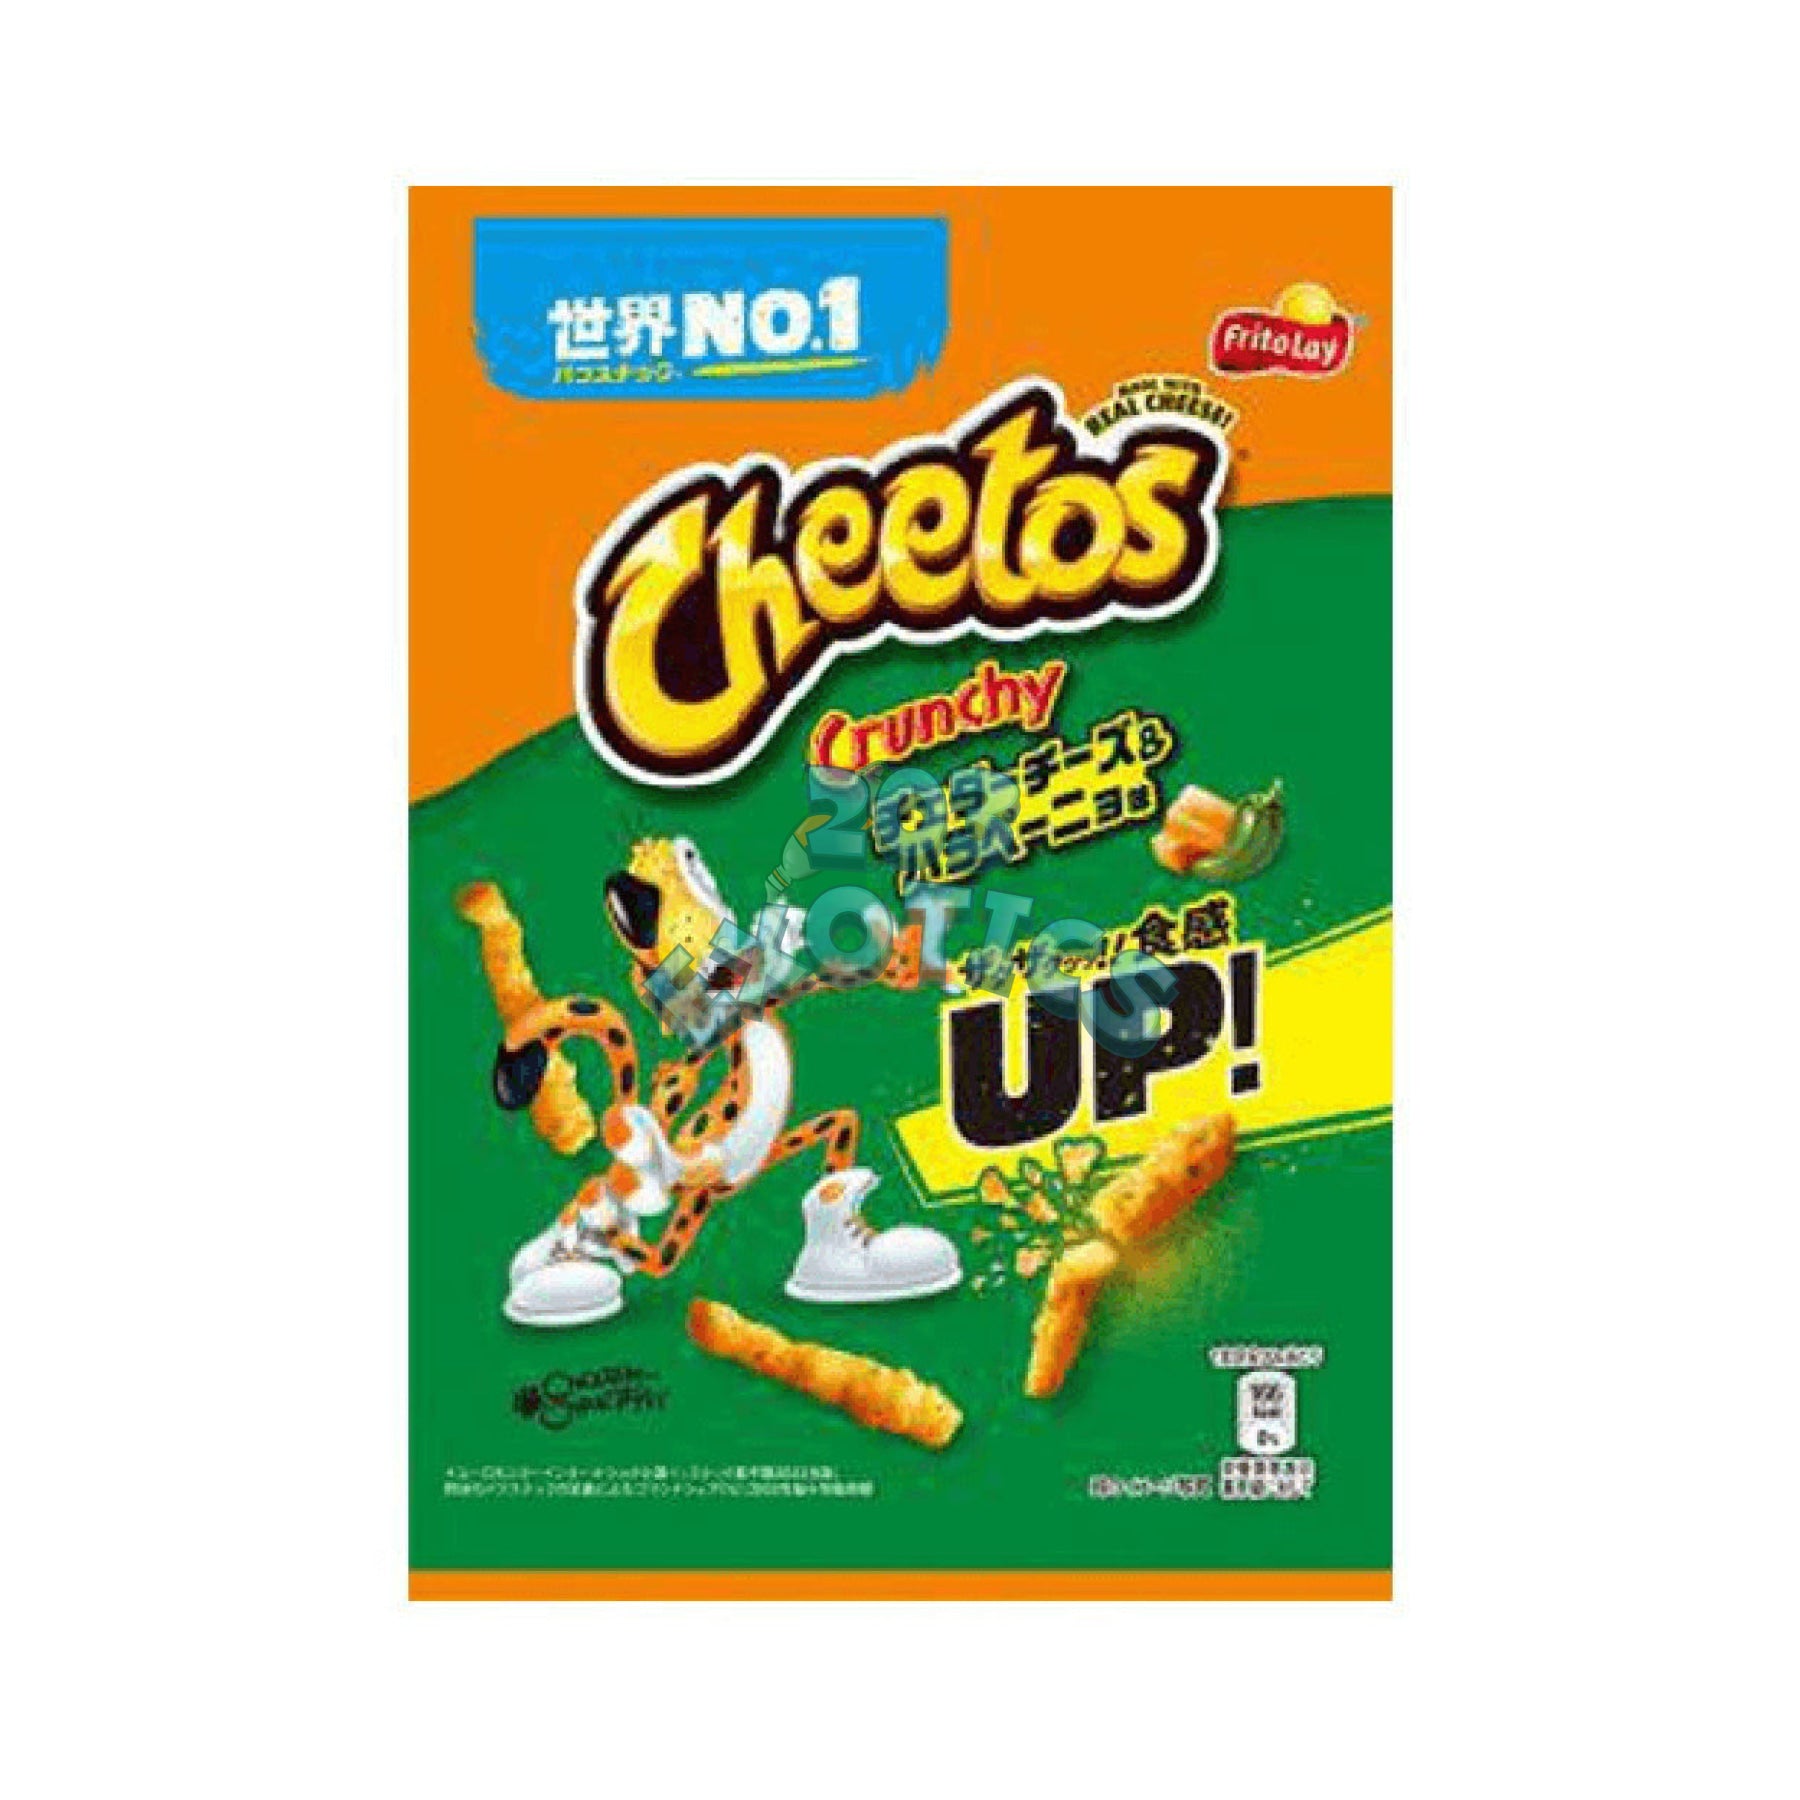 Cheetos Crunchy Jalapeno & Cheddar (65G) (Japan)